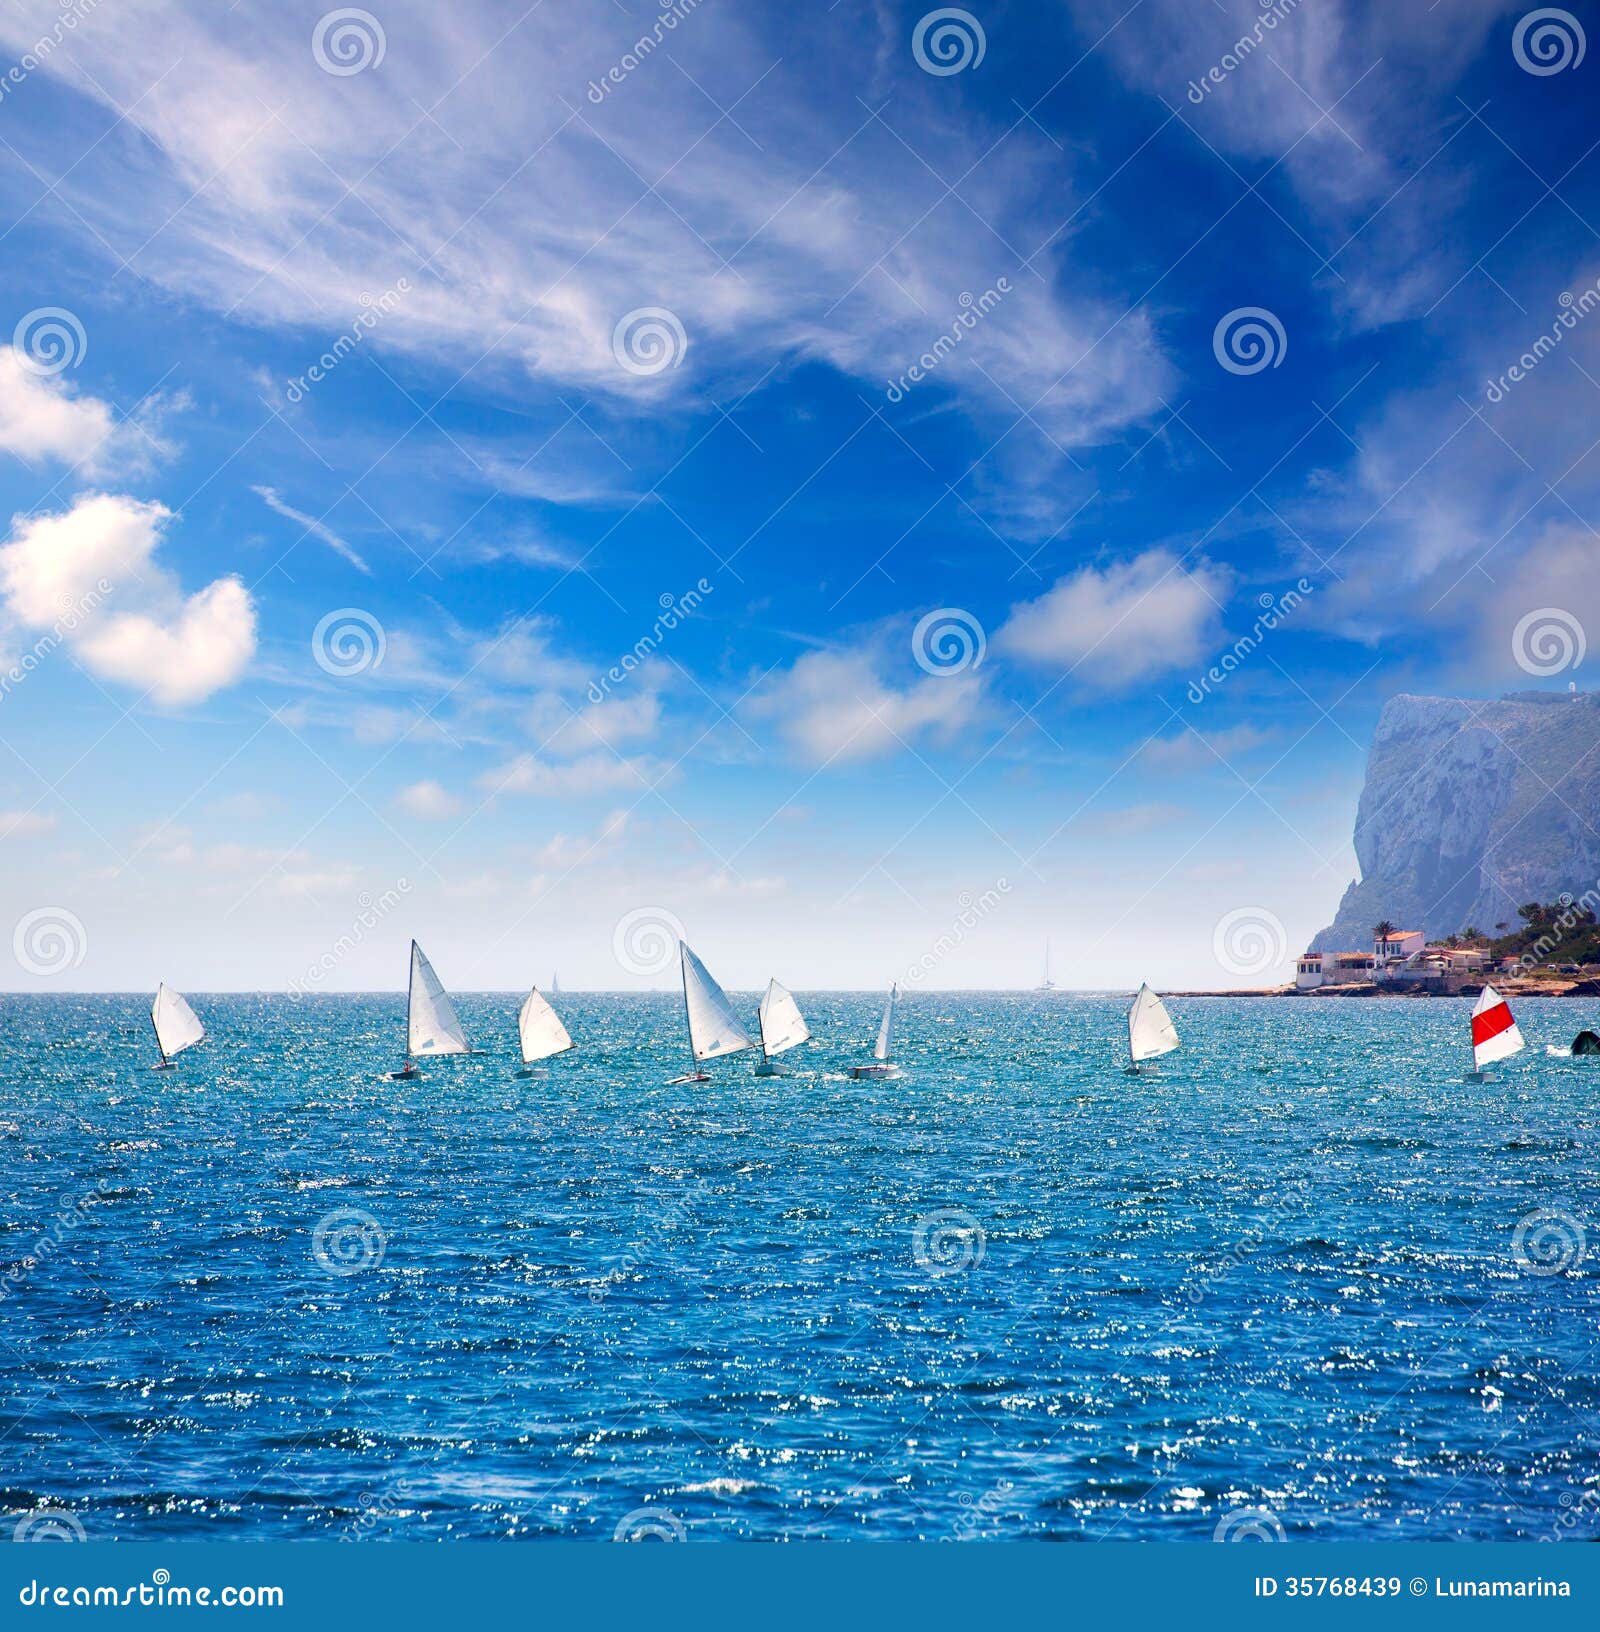 sailboats optimist learning to sail in mediterranean at denia